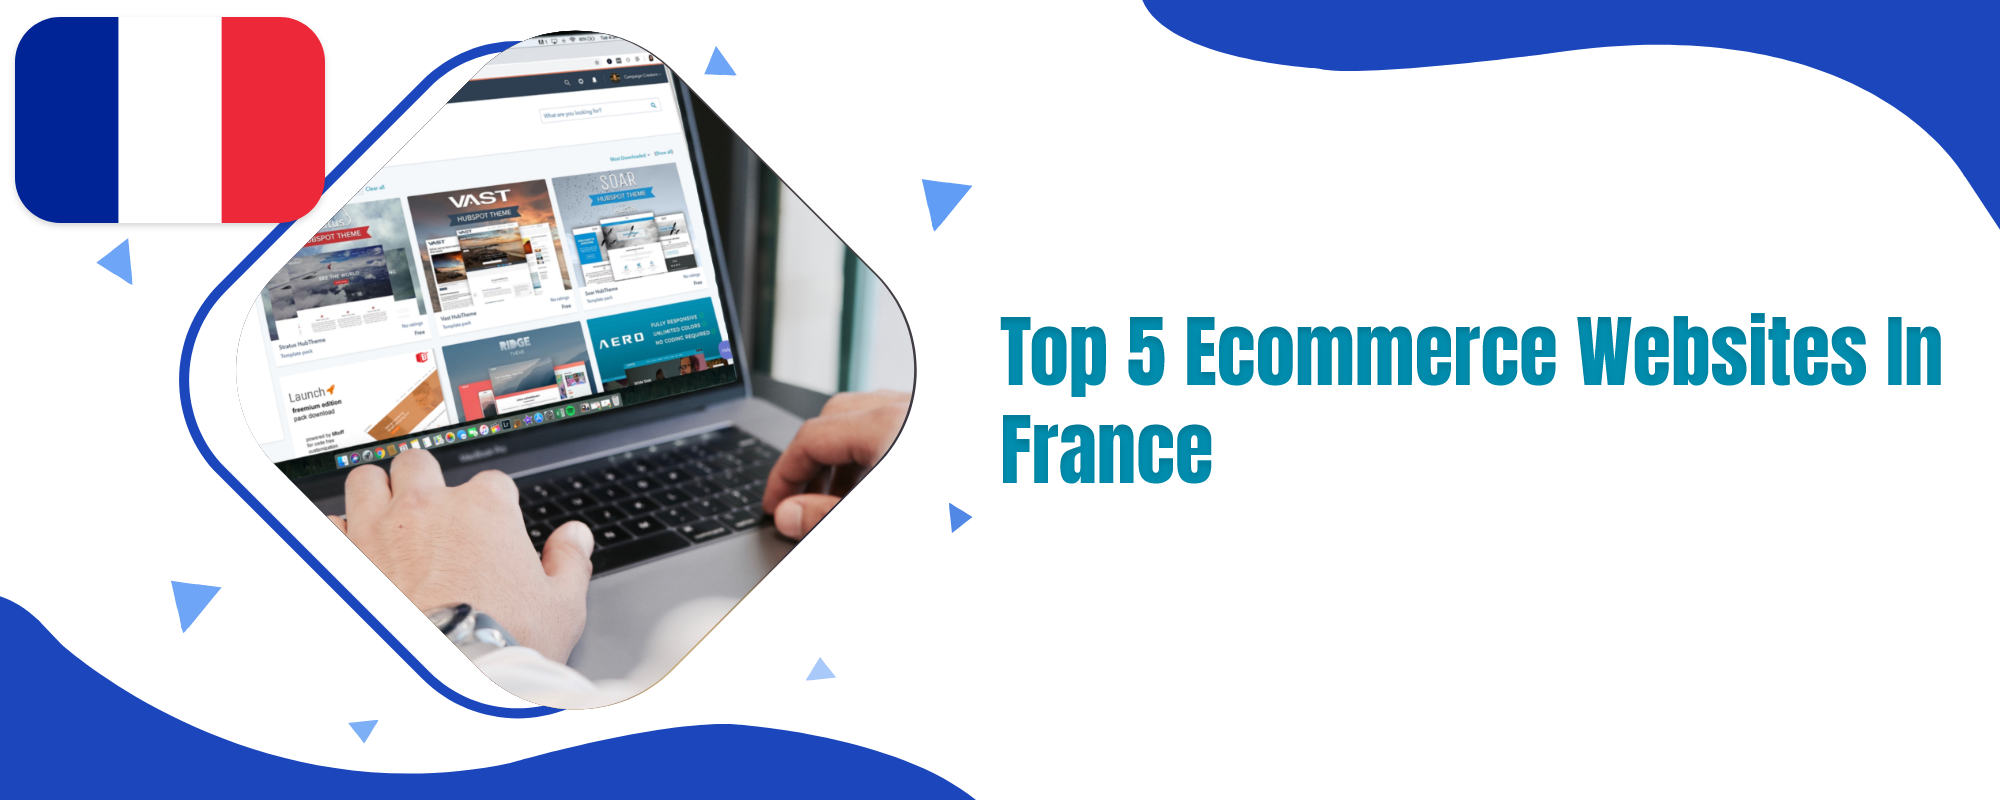 Ecommerce websites in France